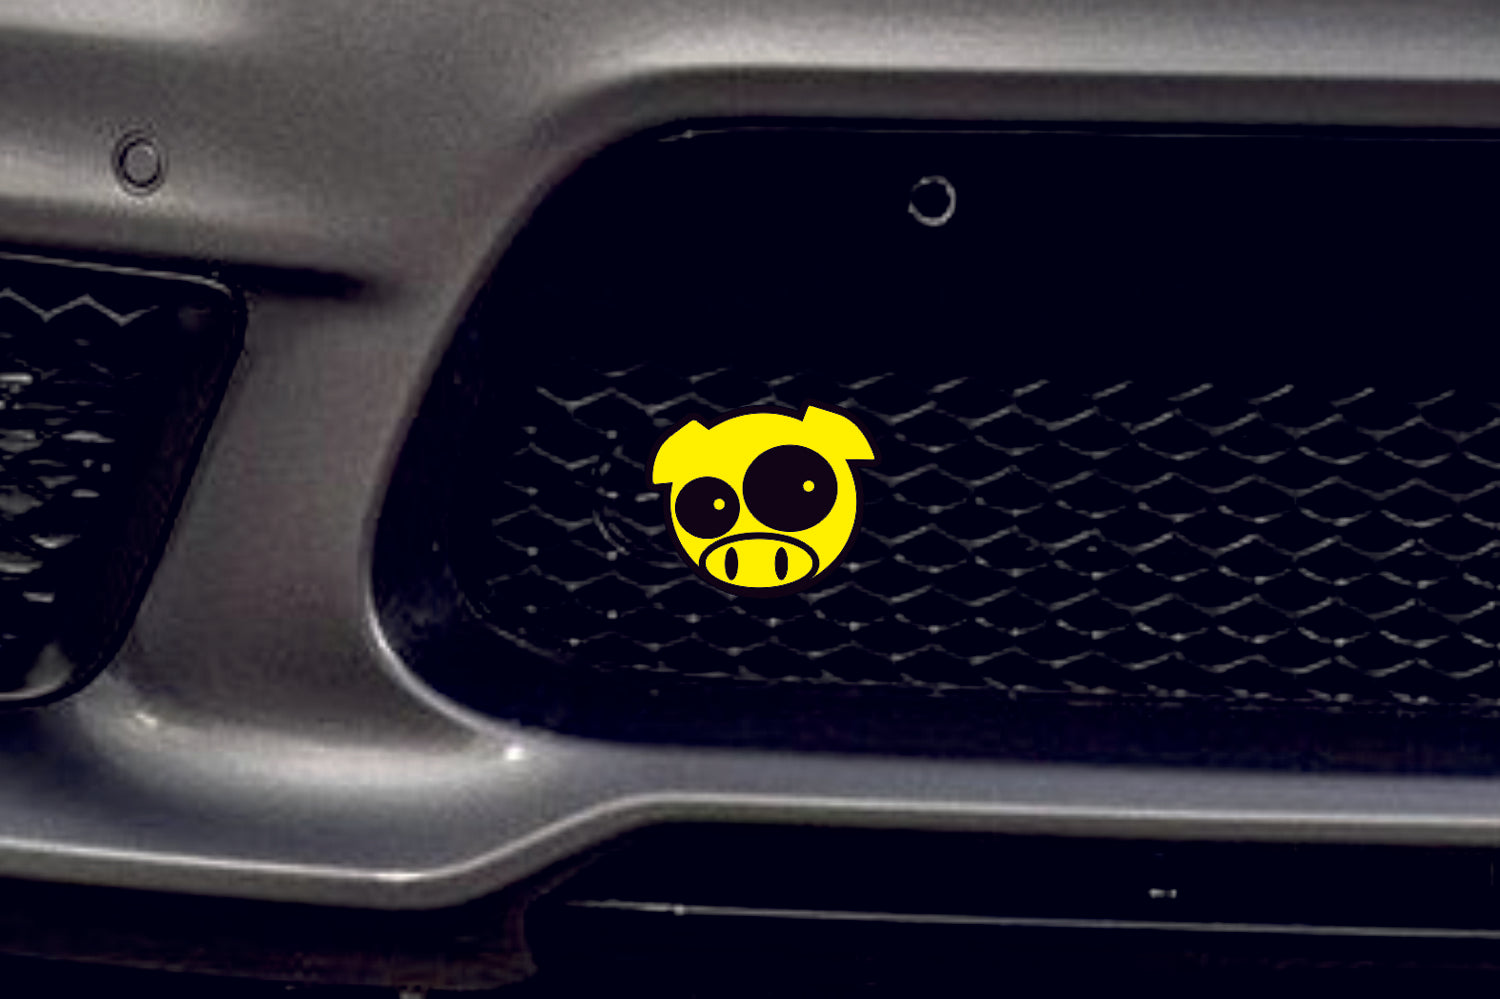 Subaru Radiator grille emblem with Subaru Pig logo - decoinfabric